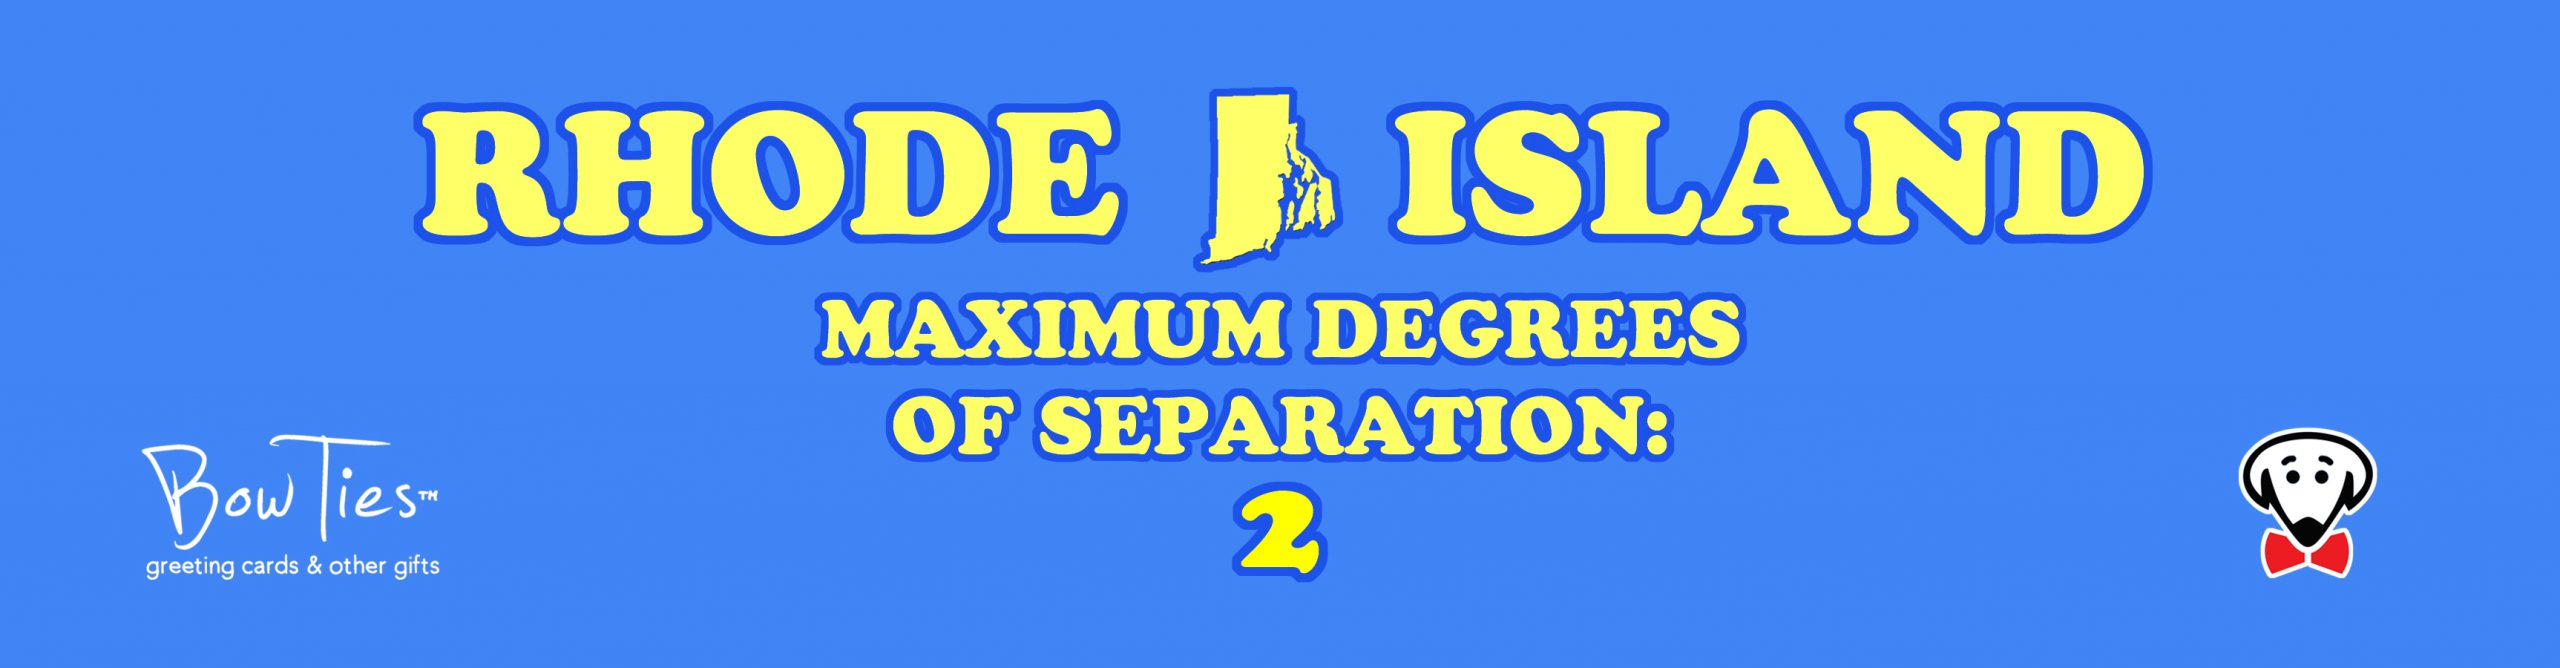 Rhode Island: MAXIMUM DEGREES OF SEPARATION: 2 – sticker